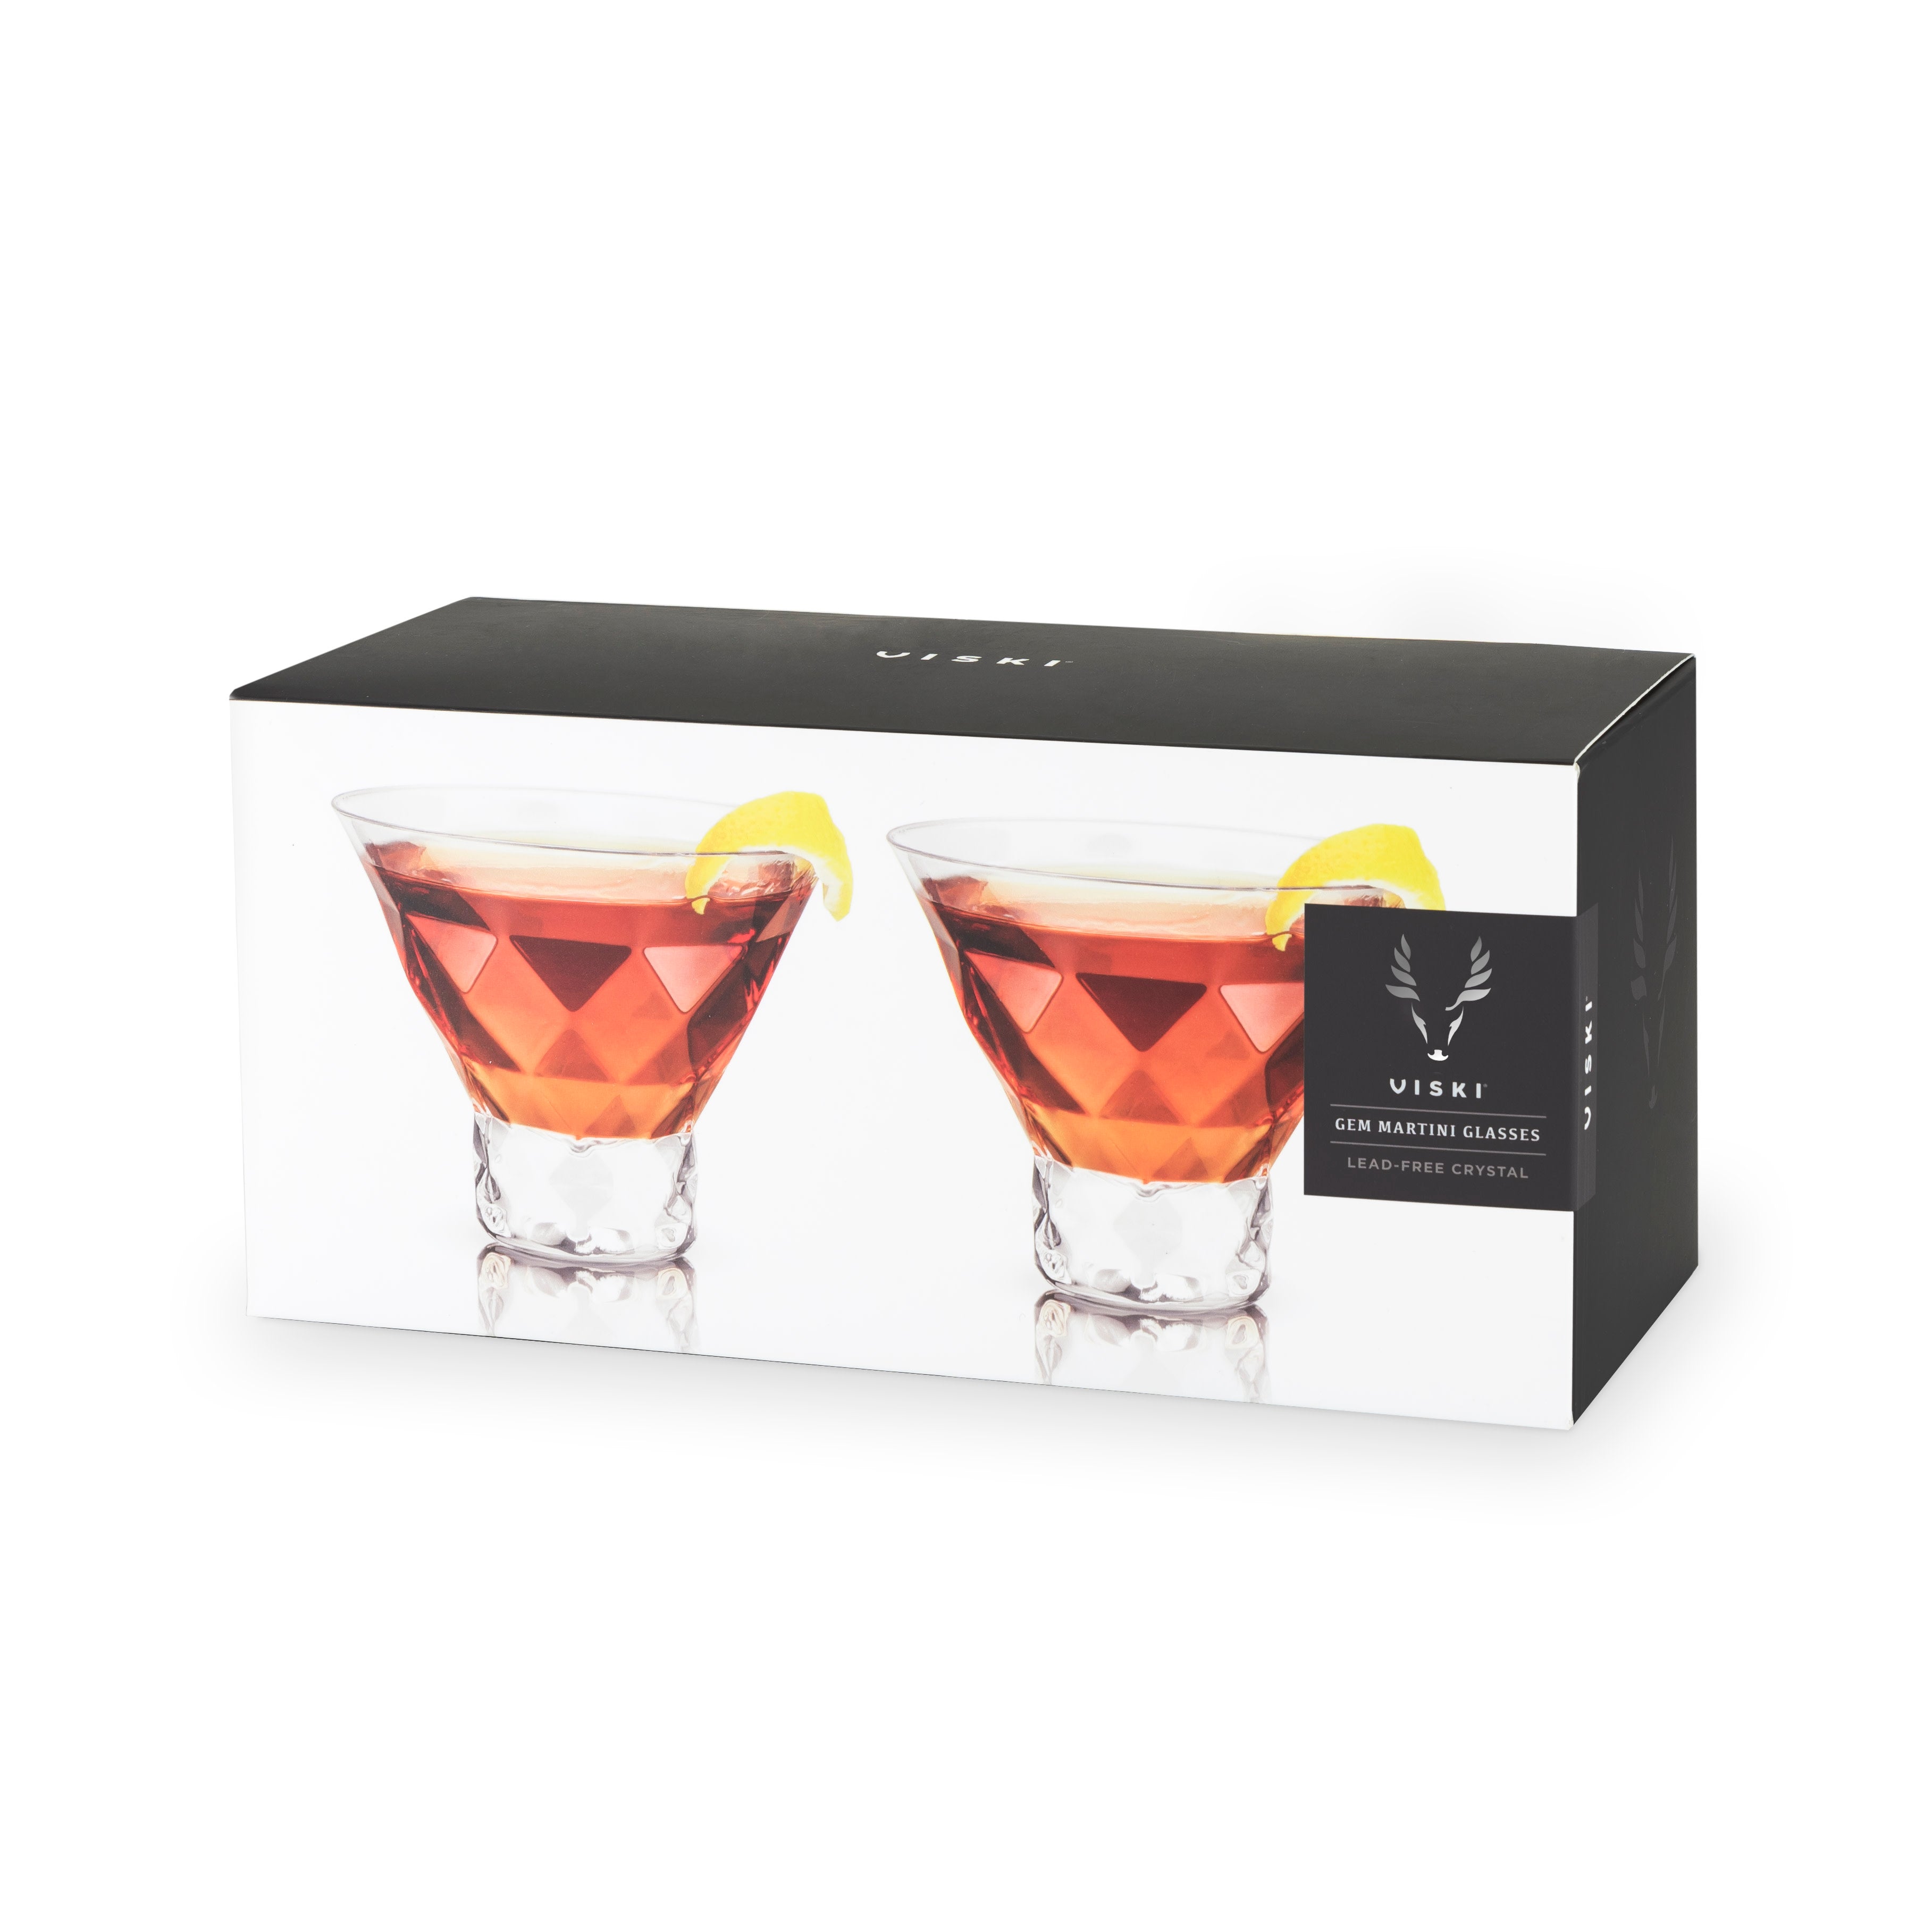 Swarovski Martini Glass Set of 2, Rainbow Edition - Crystocraft